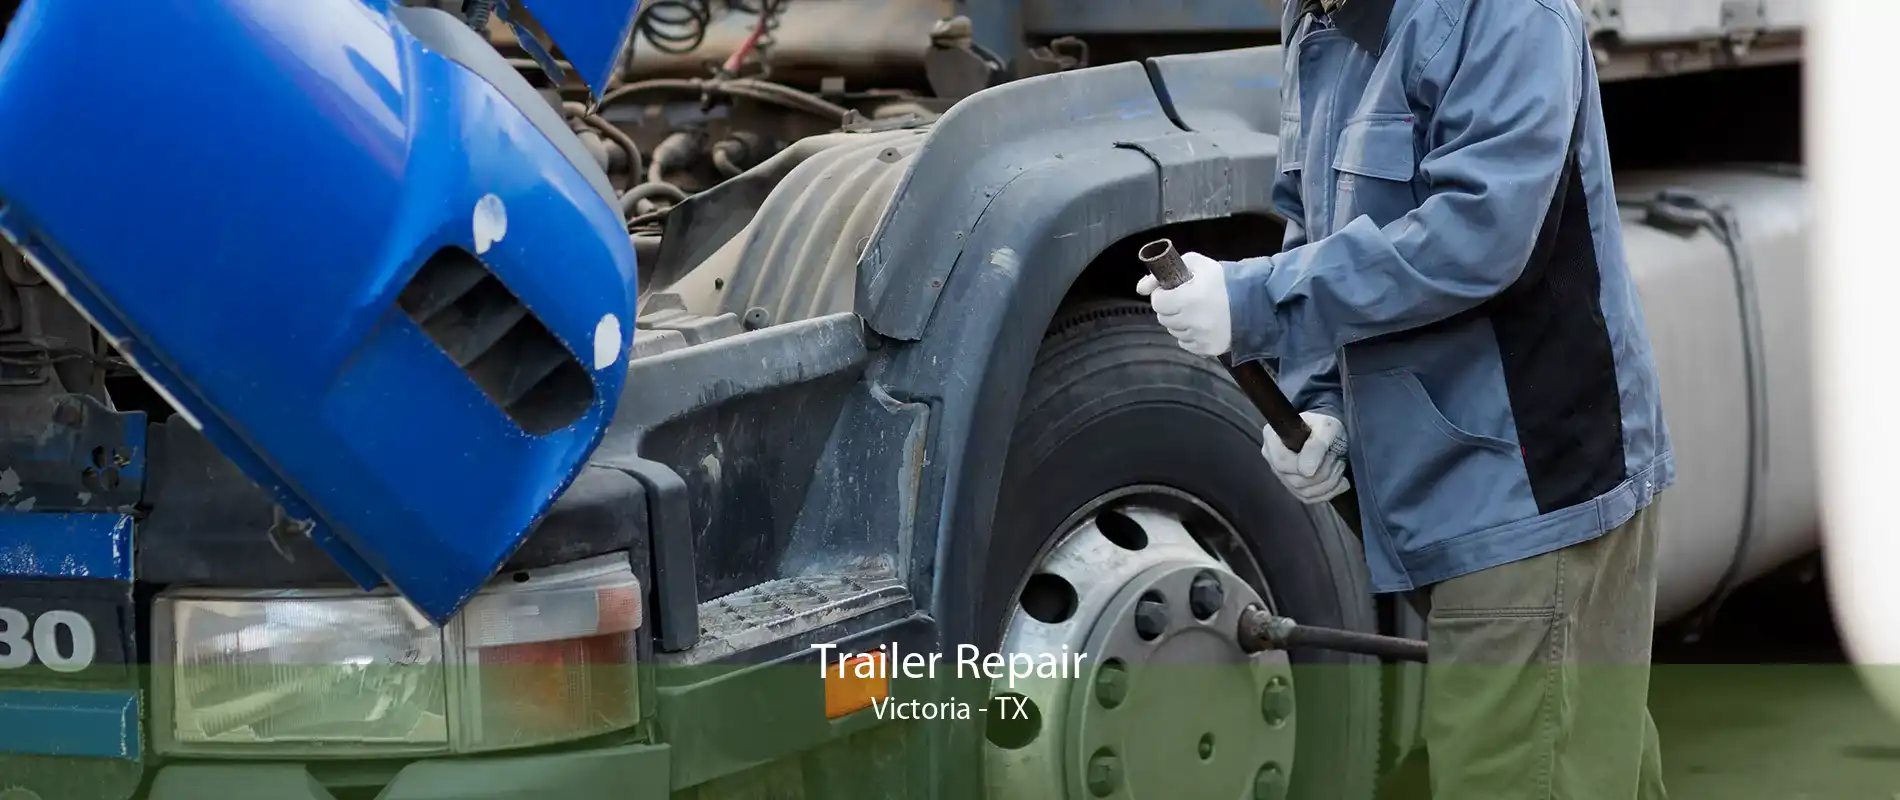 Trailer Repair Victoria - TX